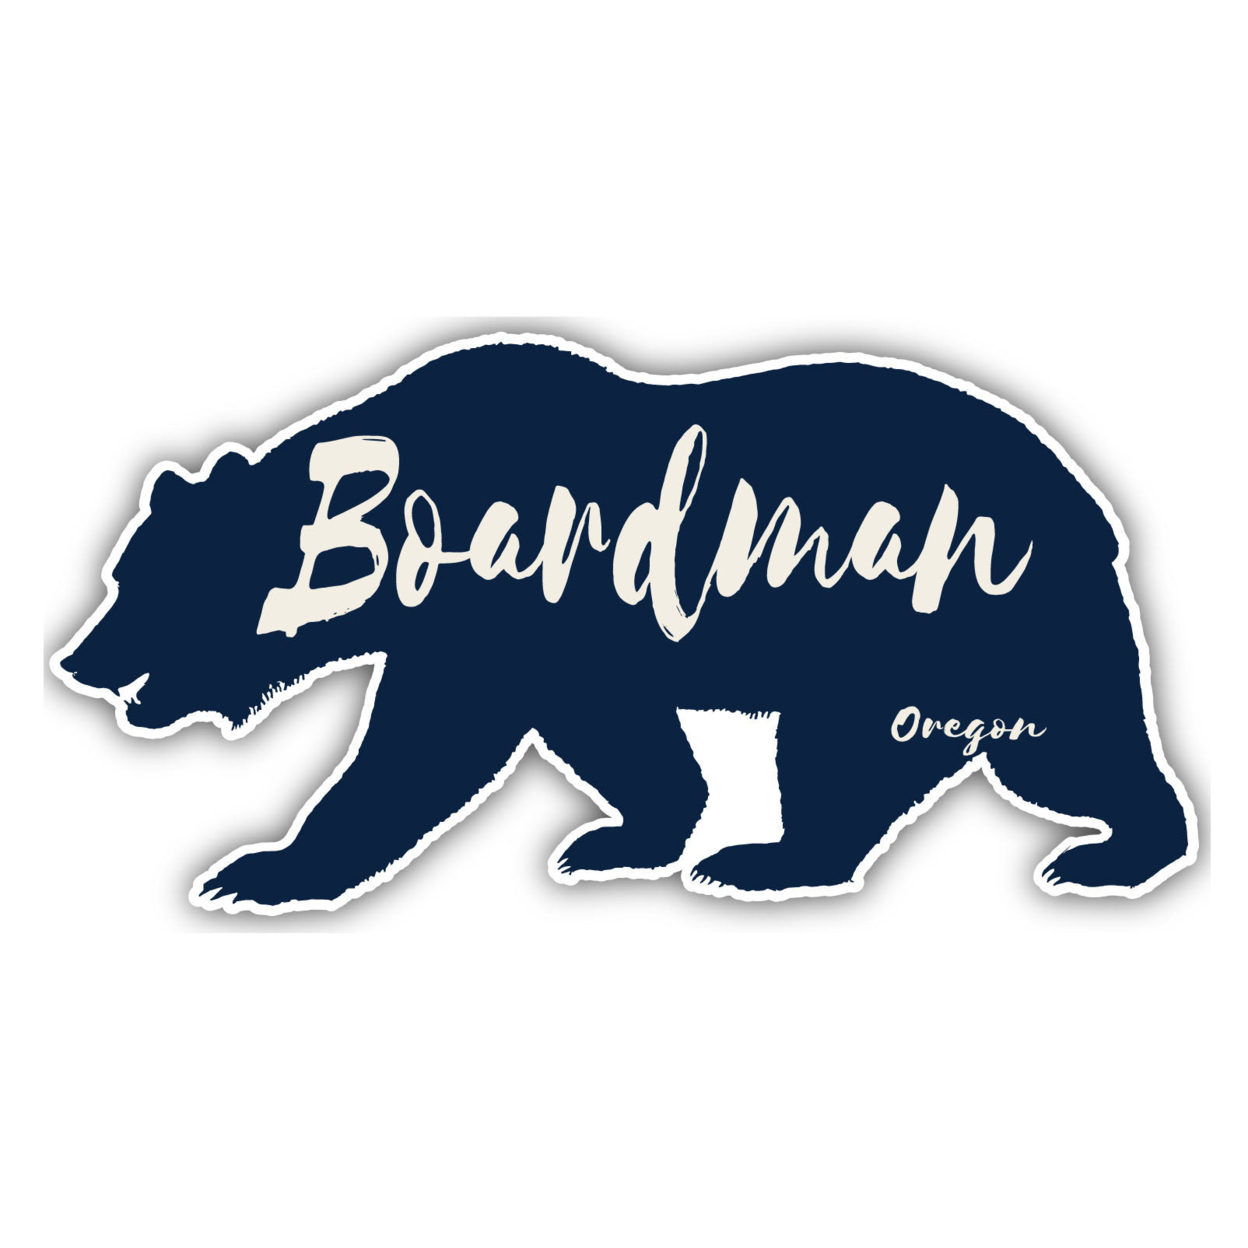 Boardman Oregon Souvenir Decorative Stickers (Choose Theme And Size) - Single Unit, 4-Inch, Camp Life